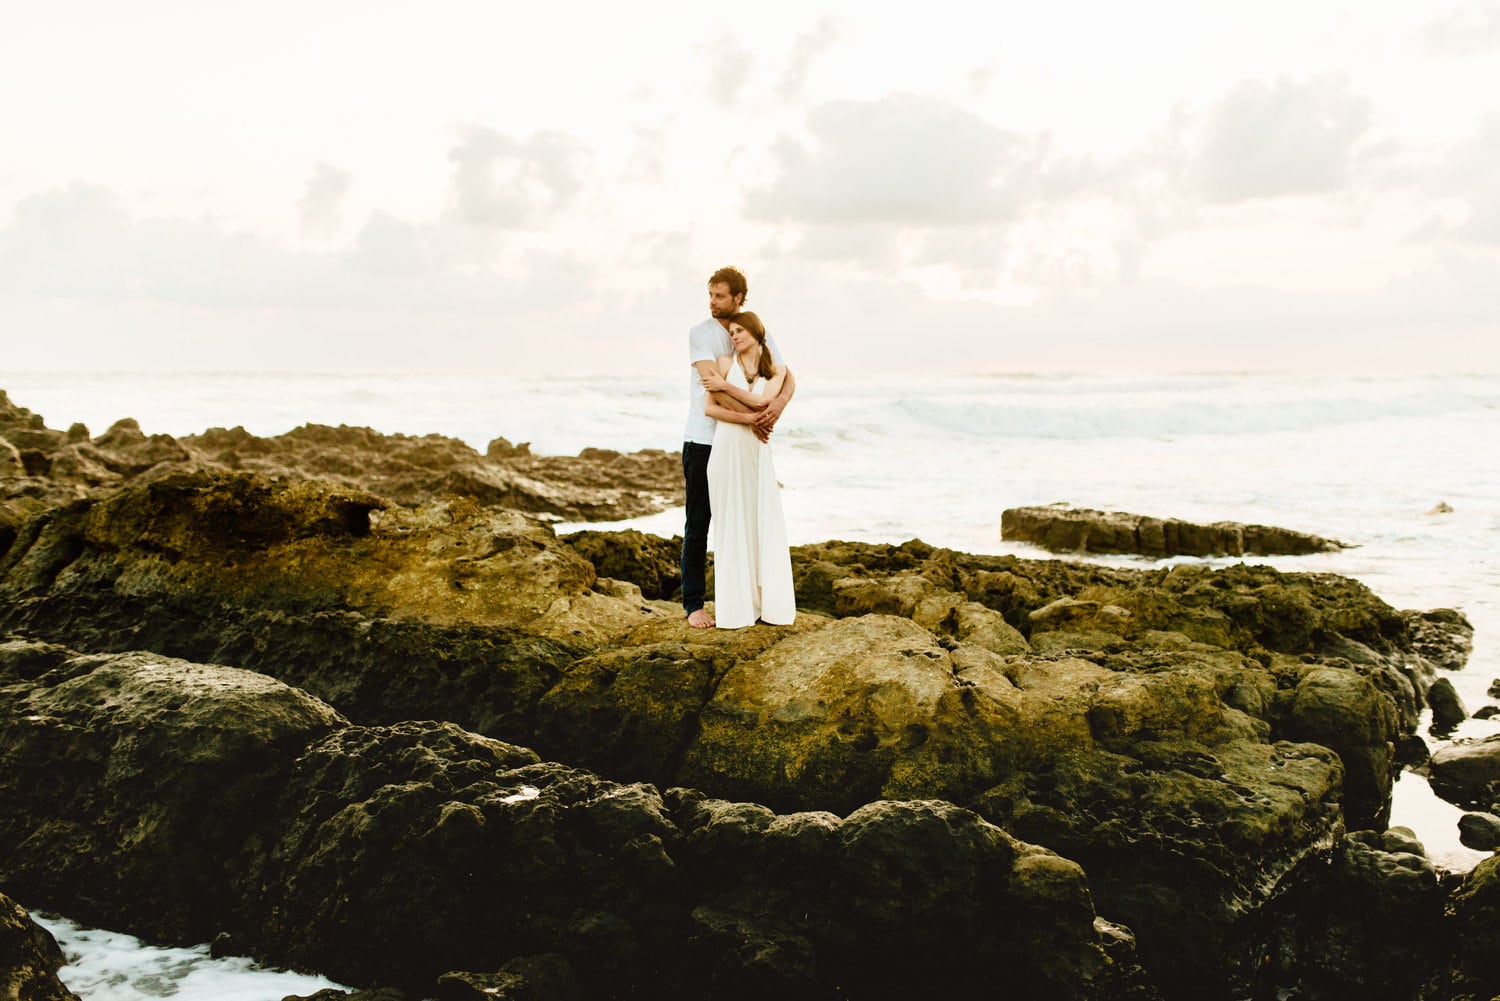 Bride and groom embrace on rocks along the shore in Santa Teresa, Costa Rica.